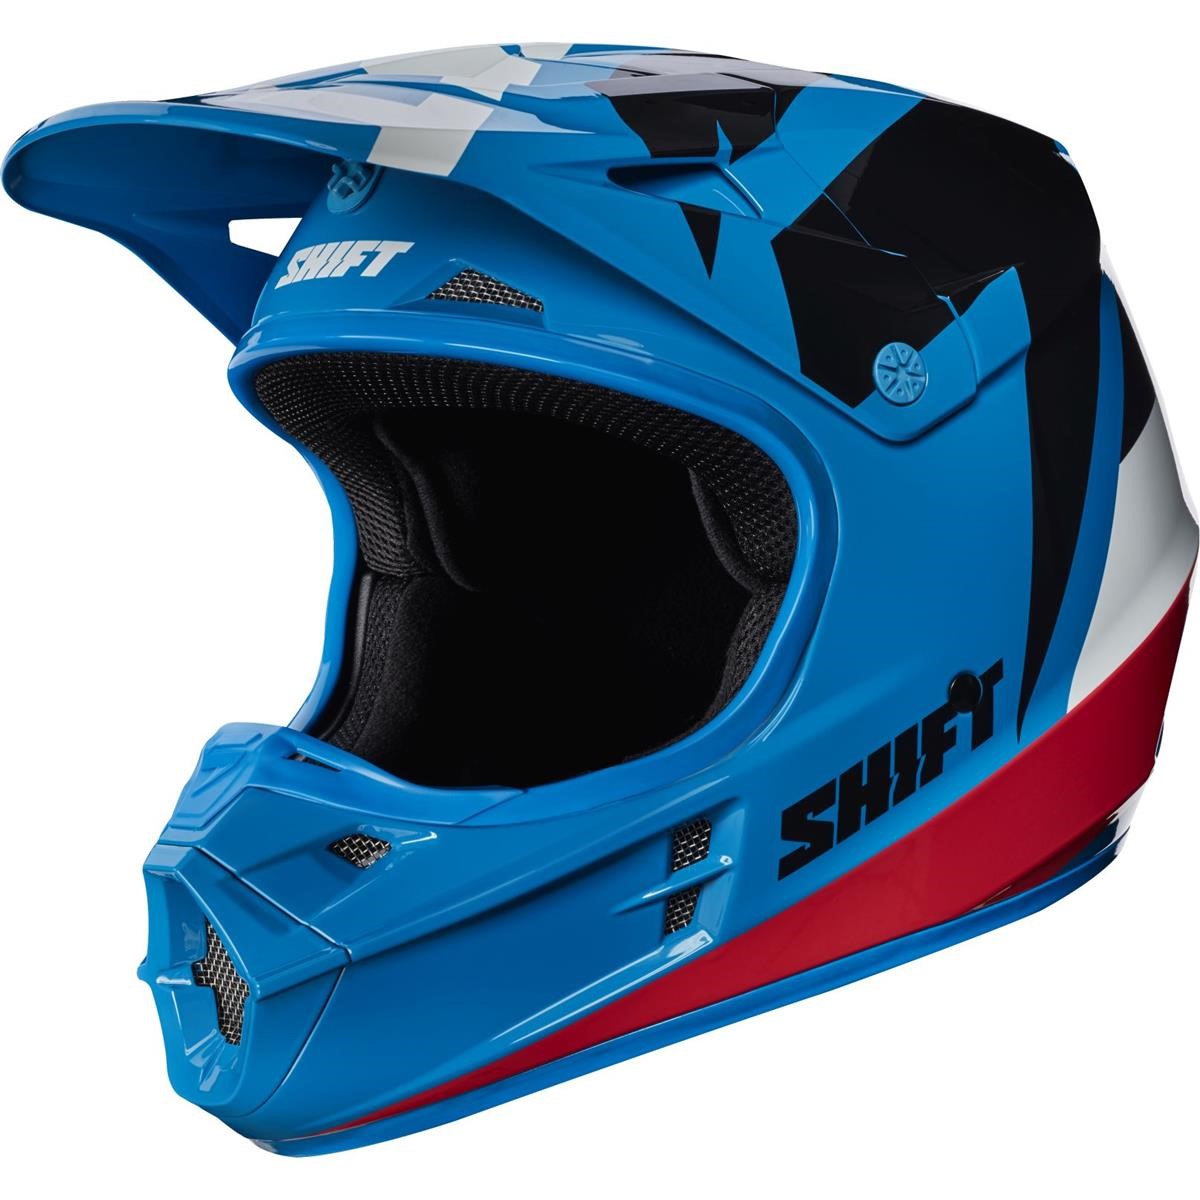 Shift Helmet Whit3 Blue - Tarmac